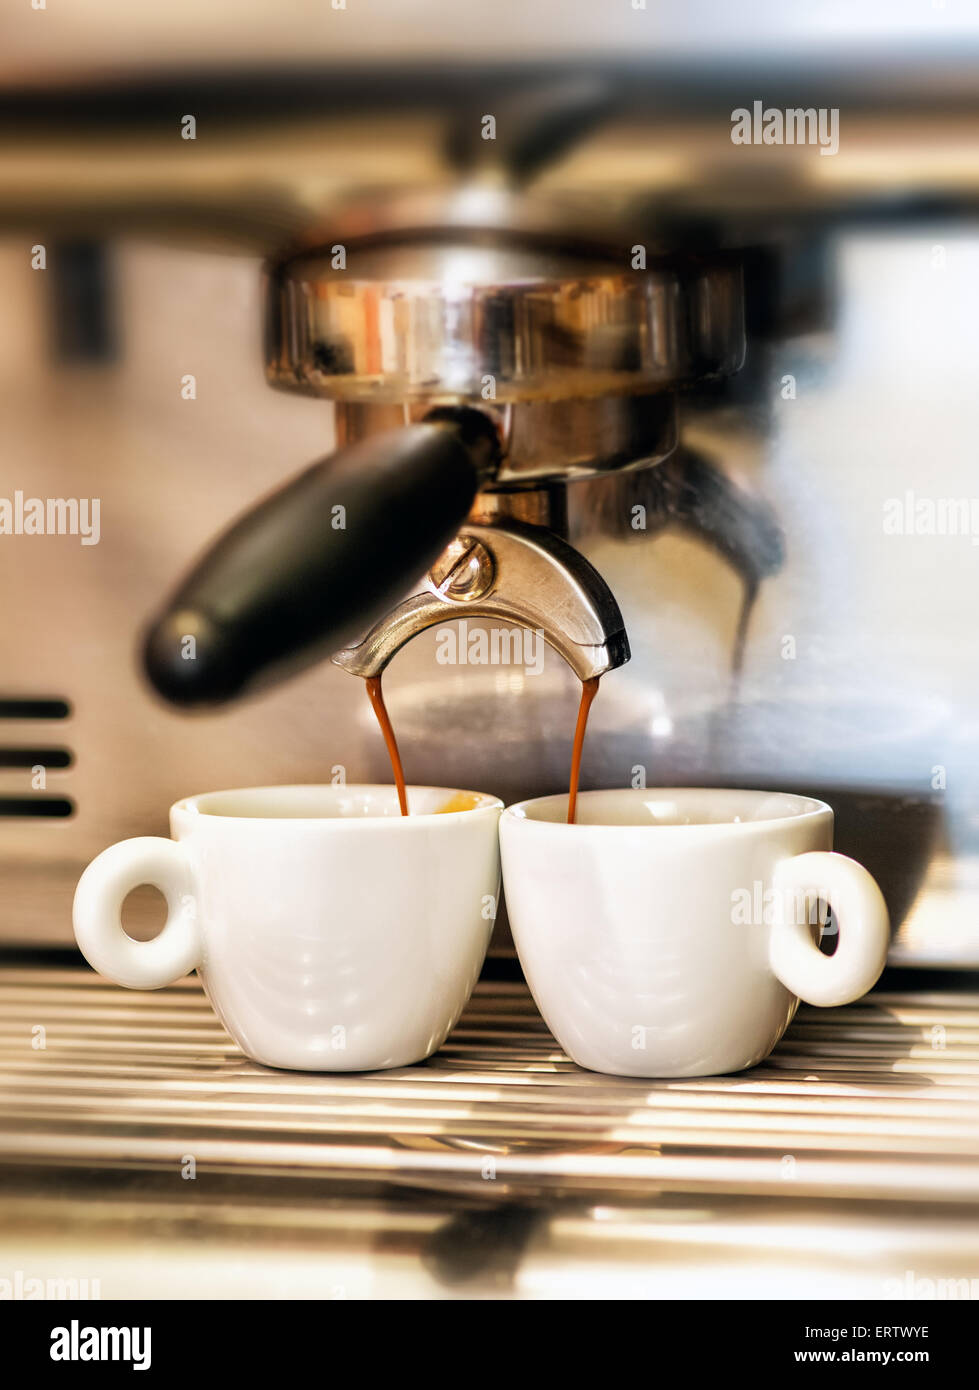 Coffee machine dispensing a double Italian espresso into two small cups Stock Photo